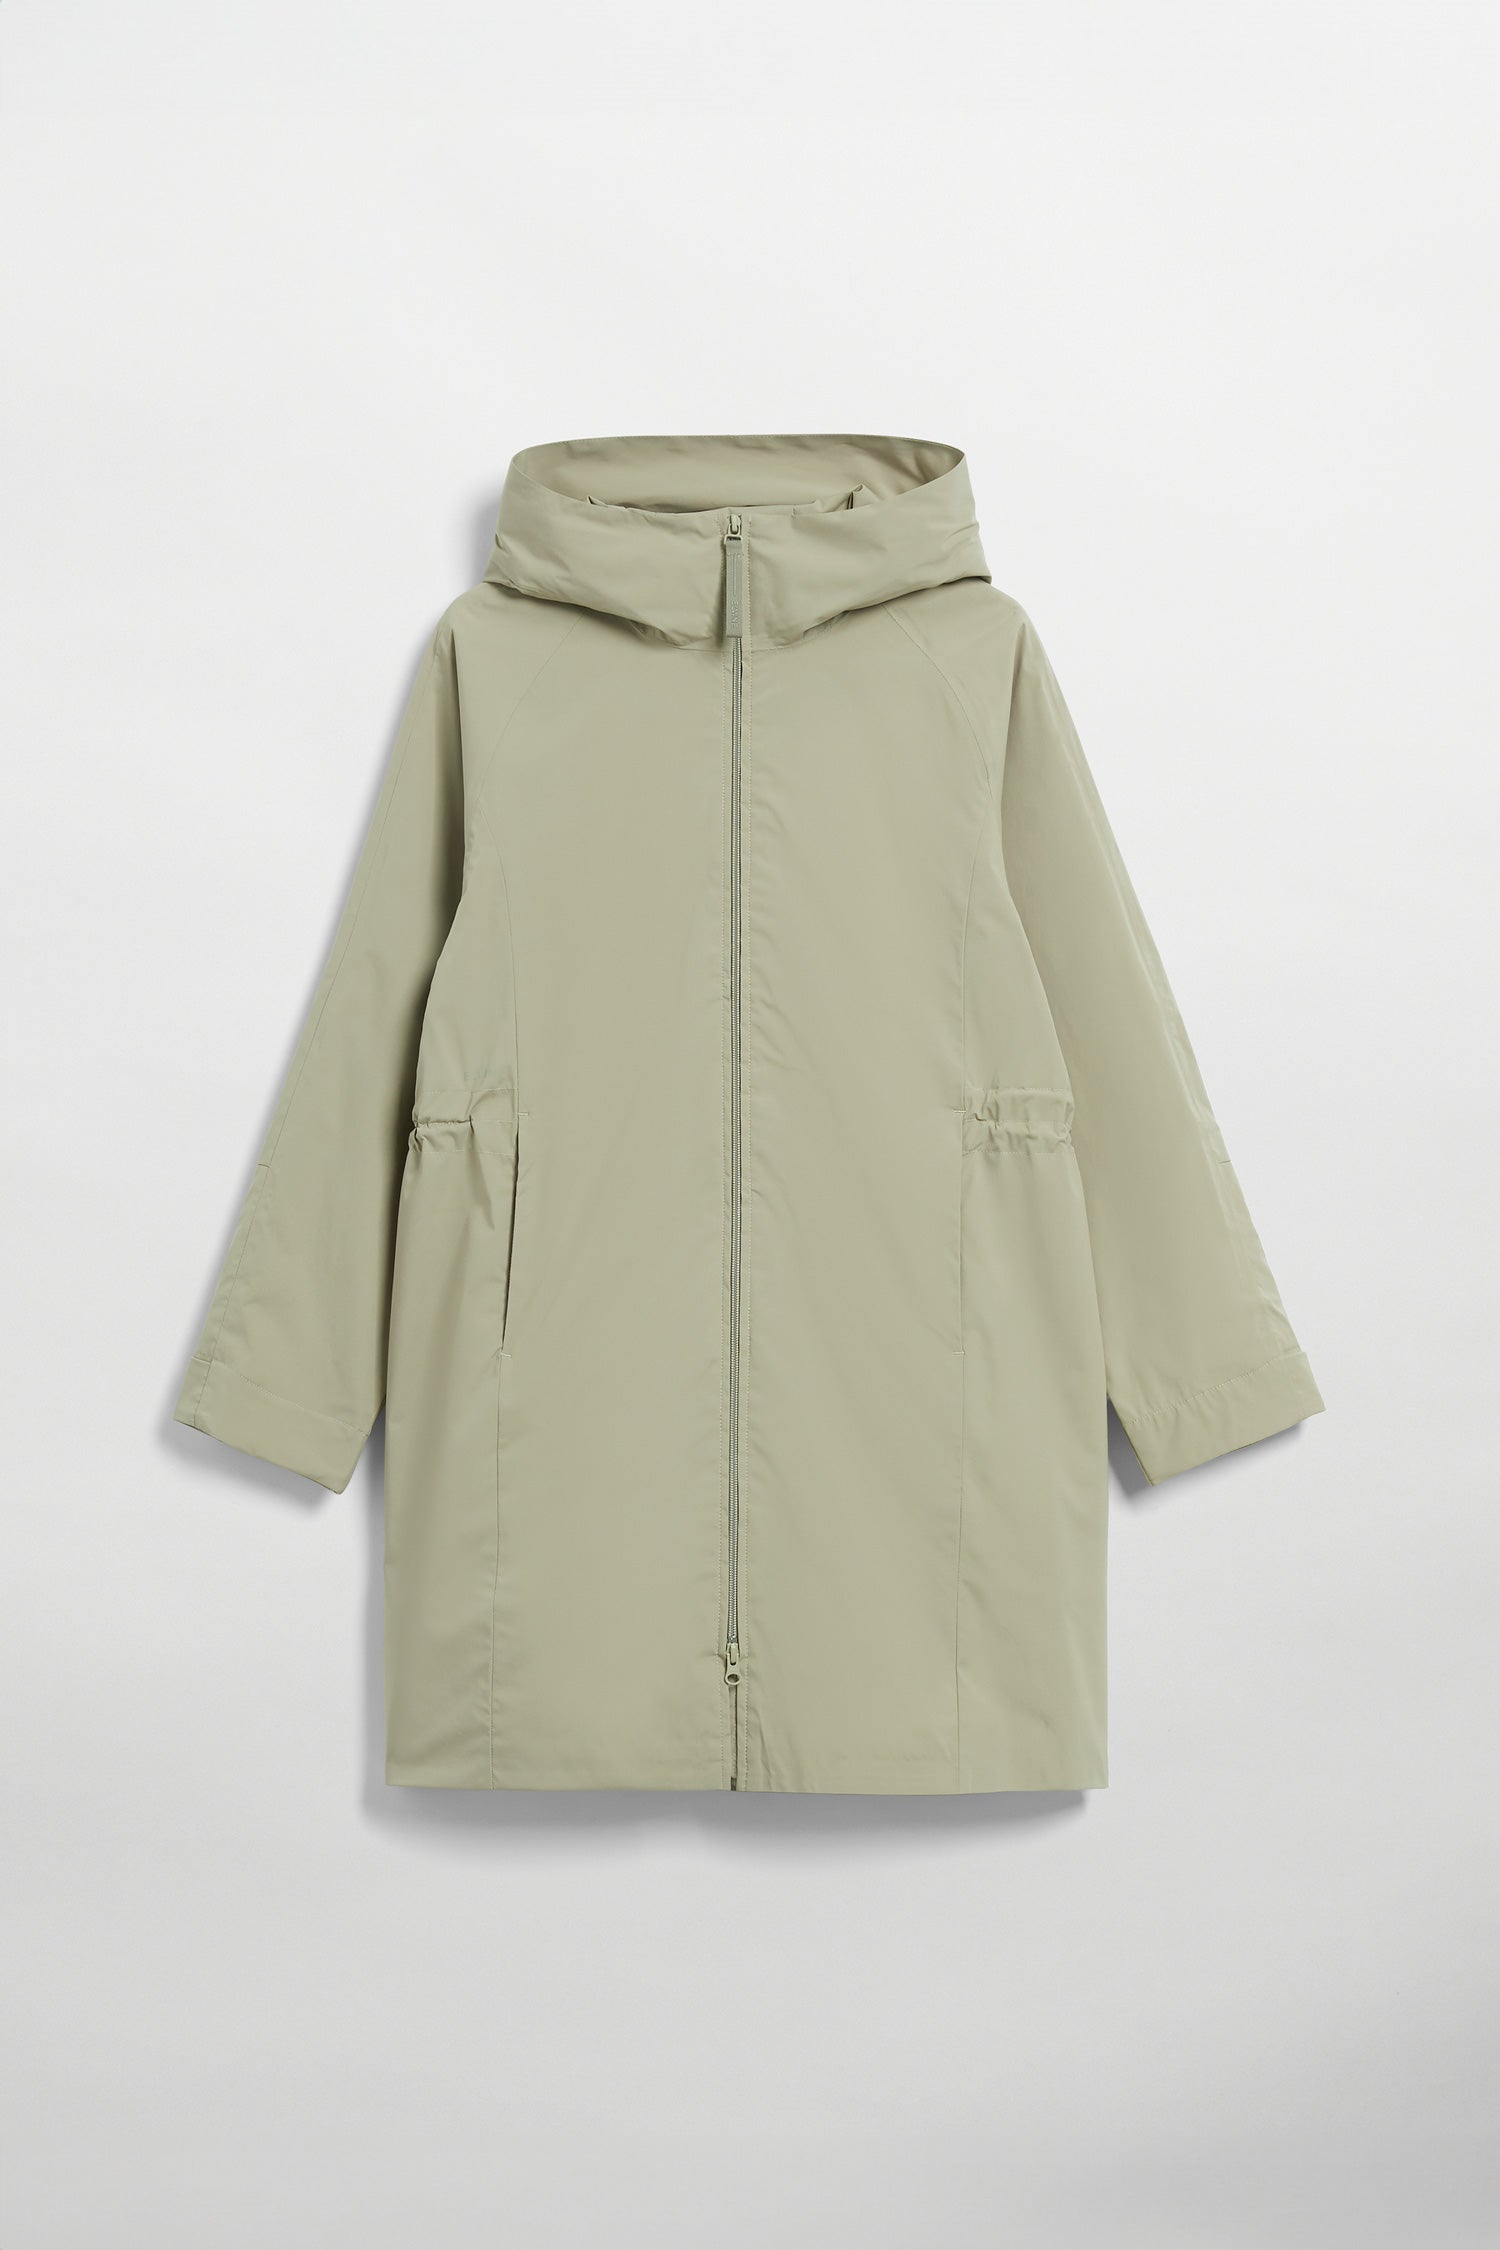 Winter Jackets & Coats For Men - Winterproof jackets| ELVINE